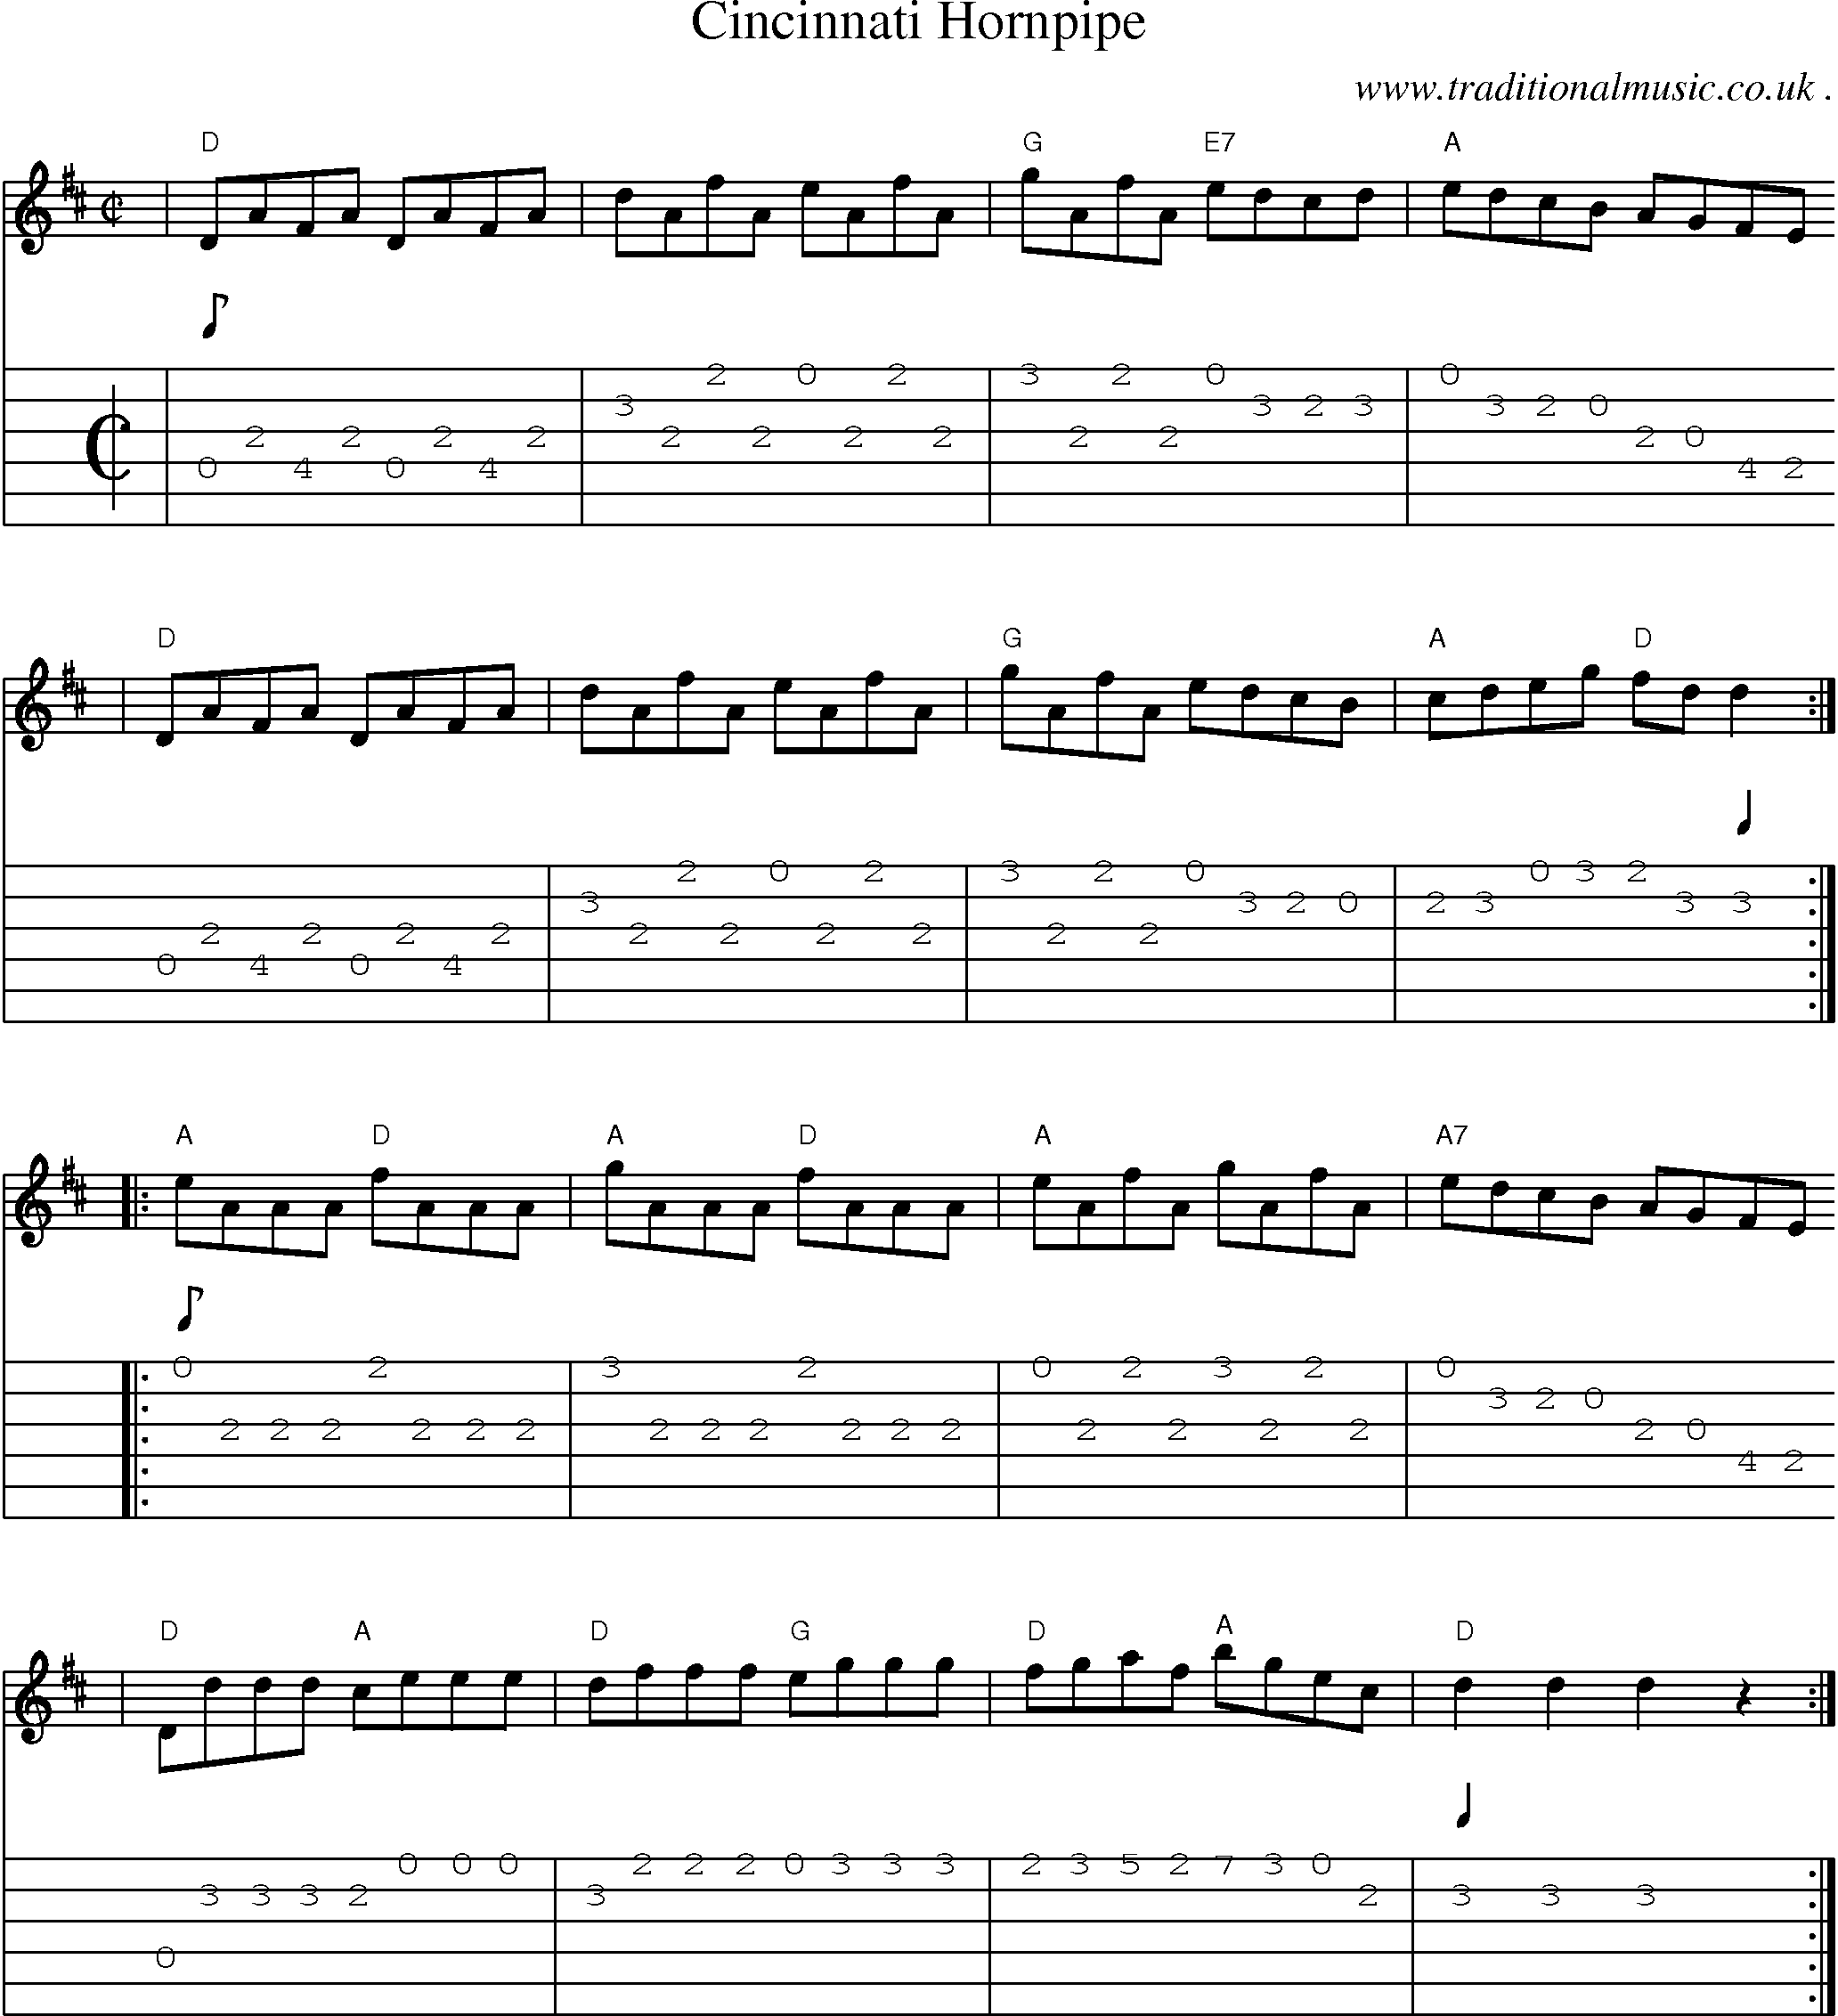 Music Score and Guitar Tabs for Cincinnati Hornpipe